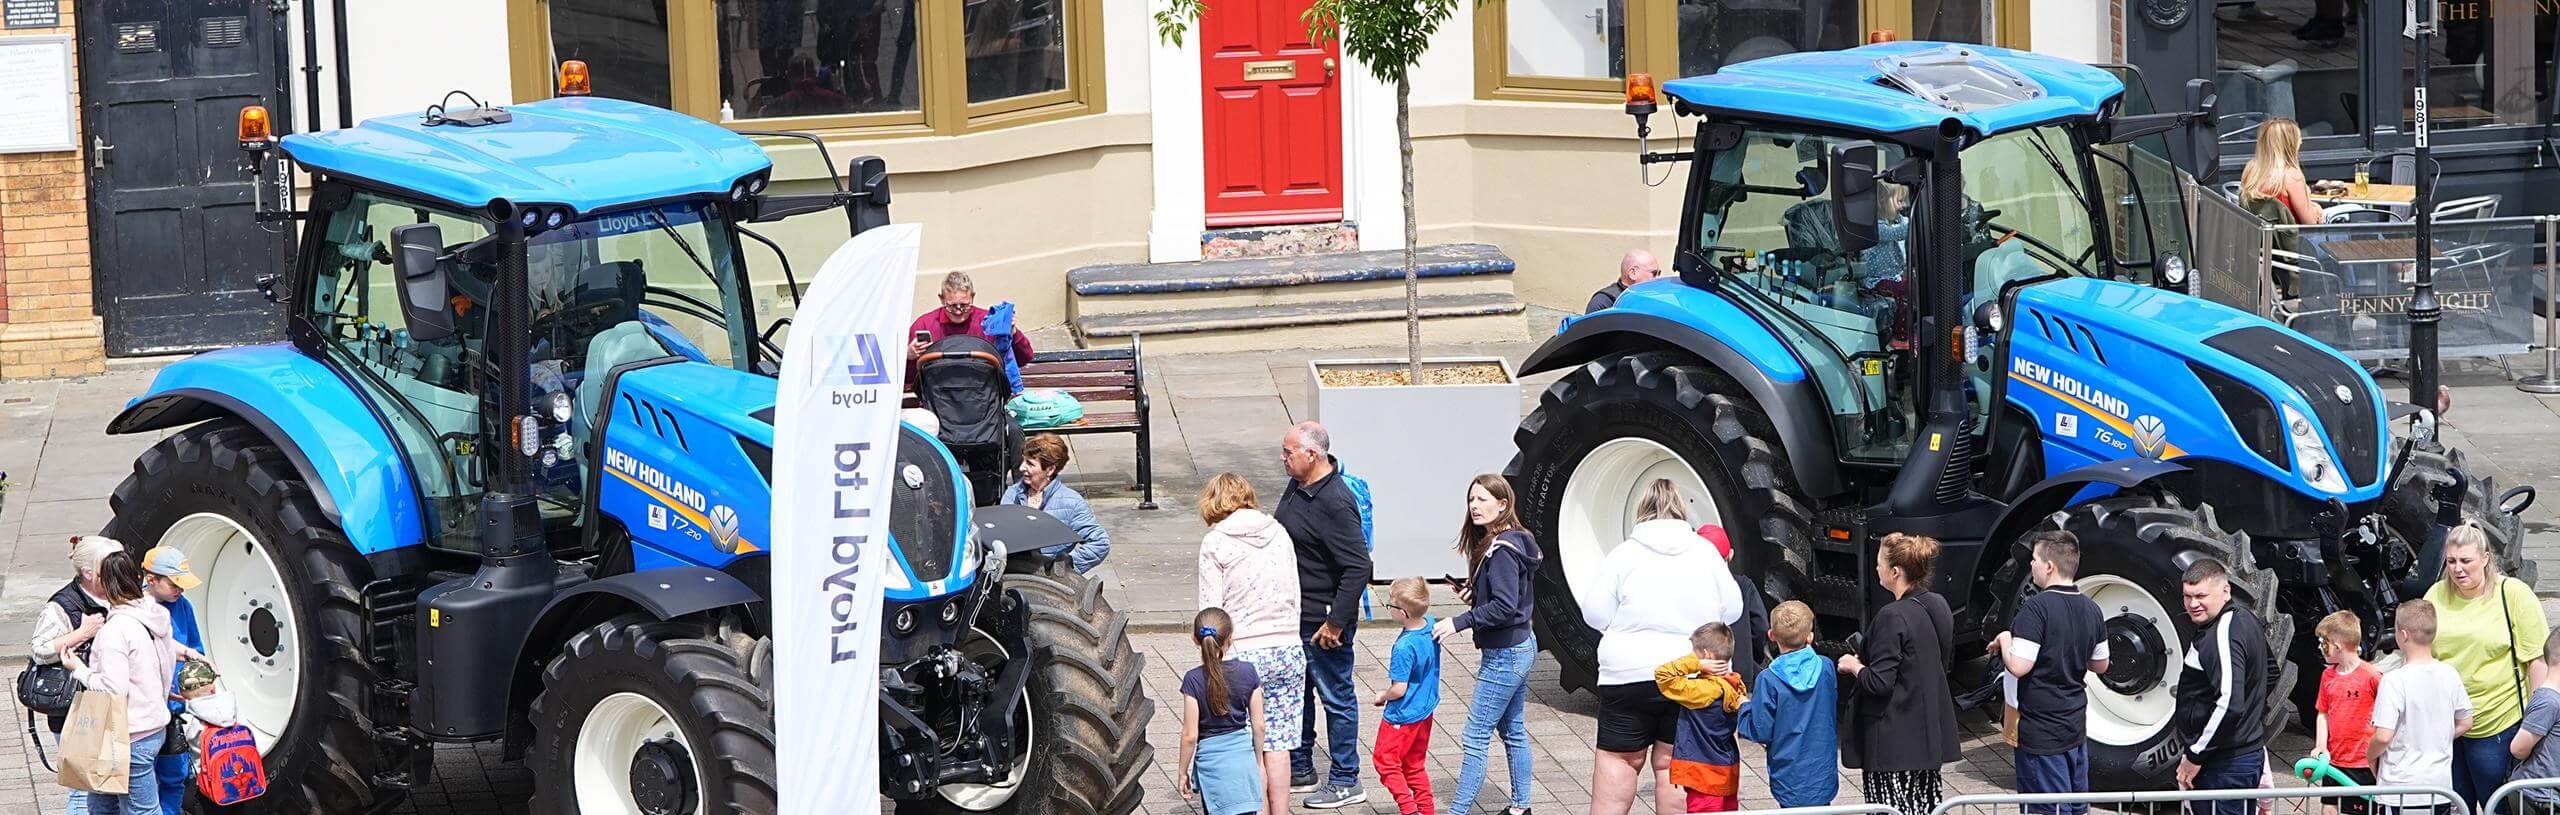 Tractors and Diggers Day at Market Square, Darlington